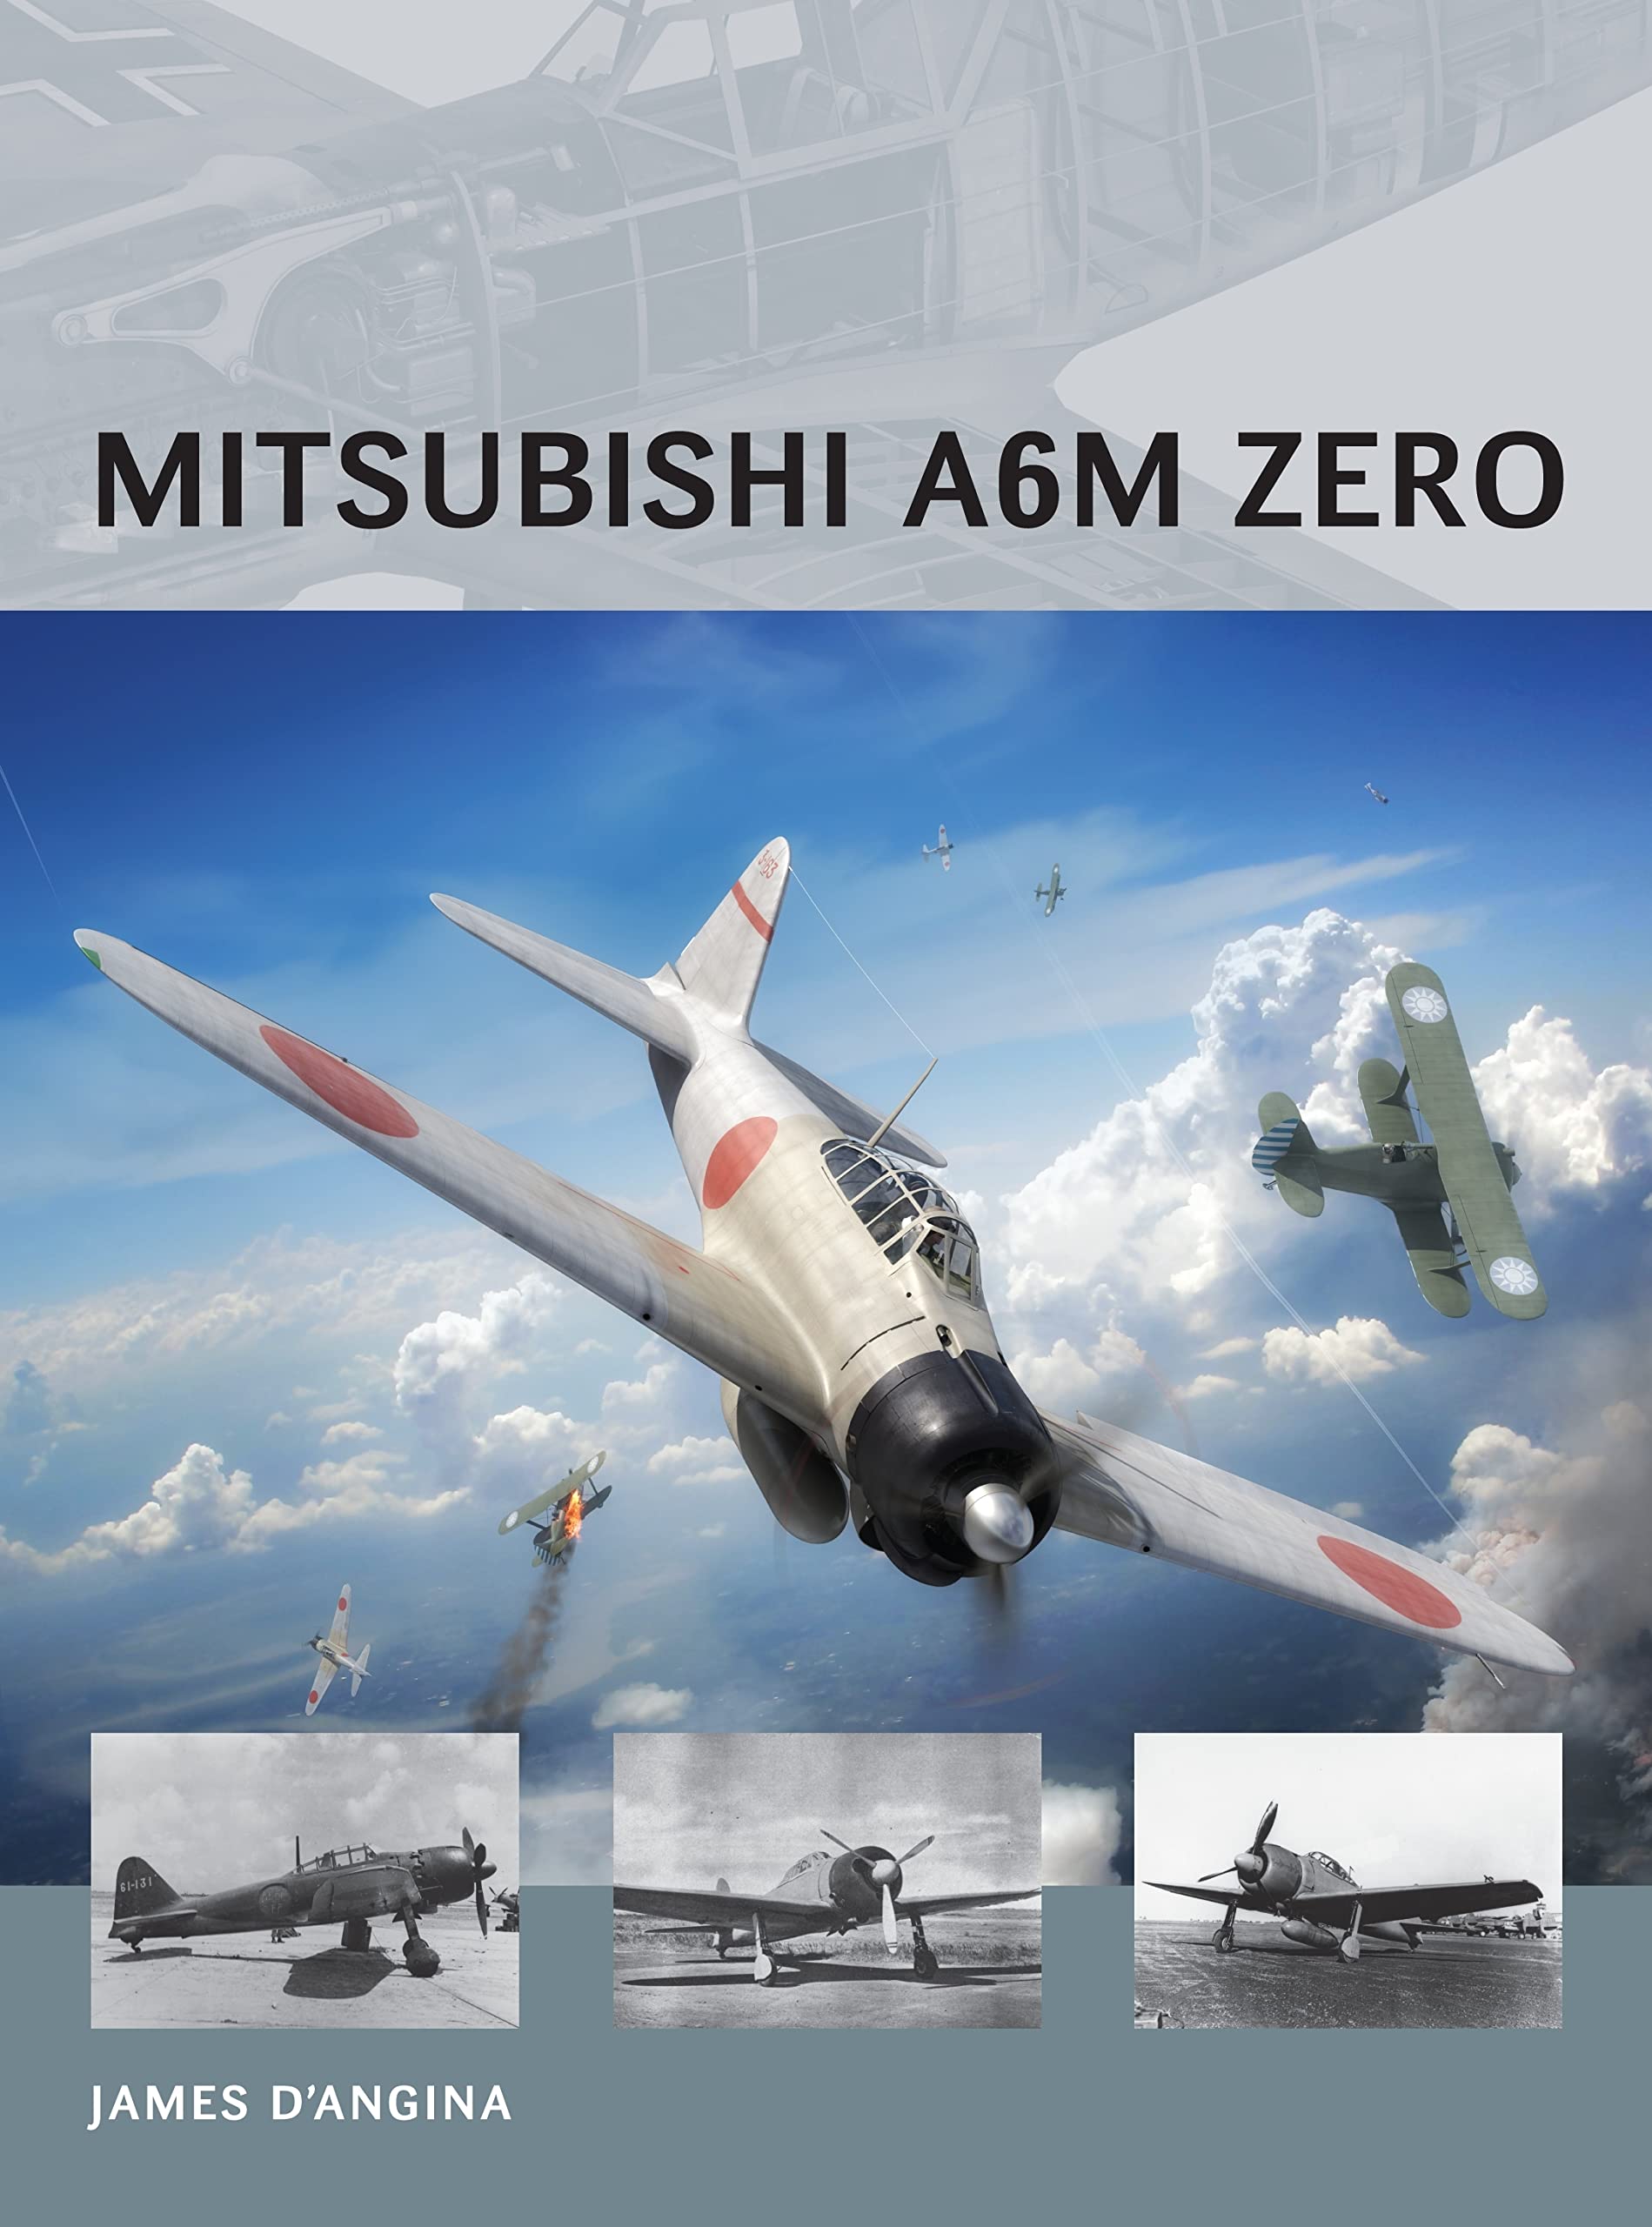 Mitsubishi A6M Zero Wallpapers